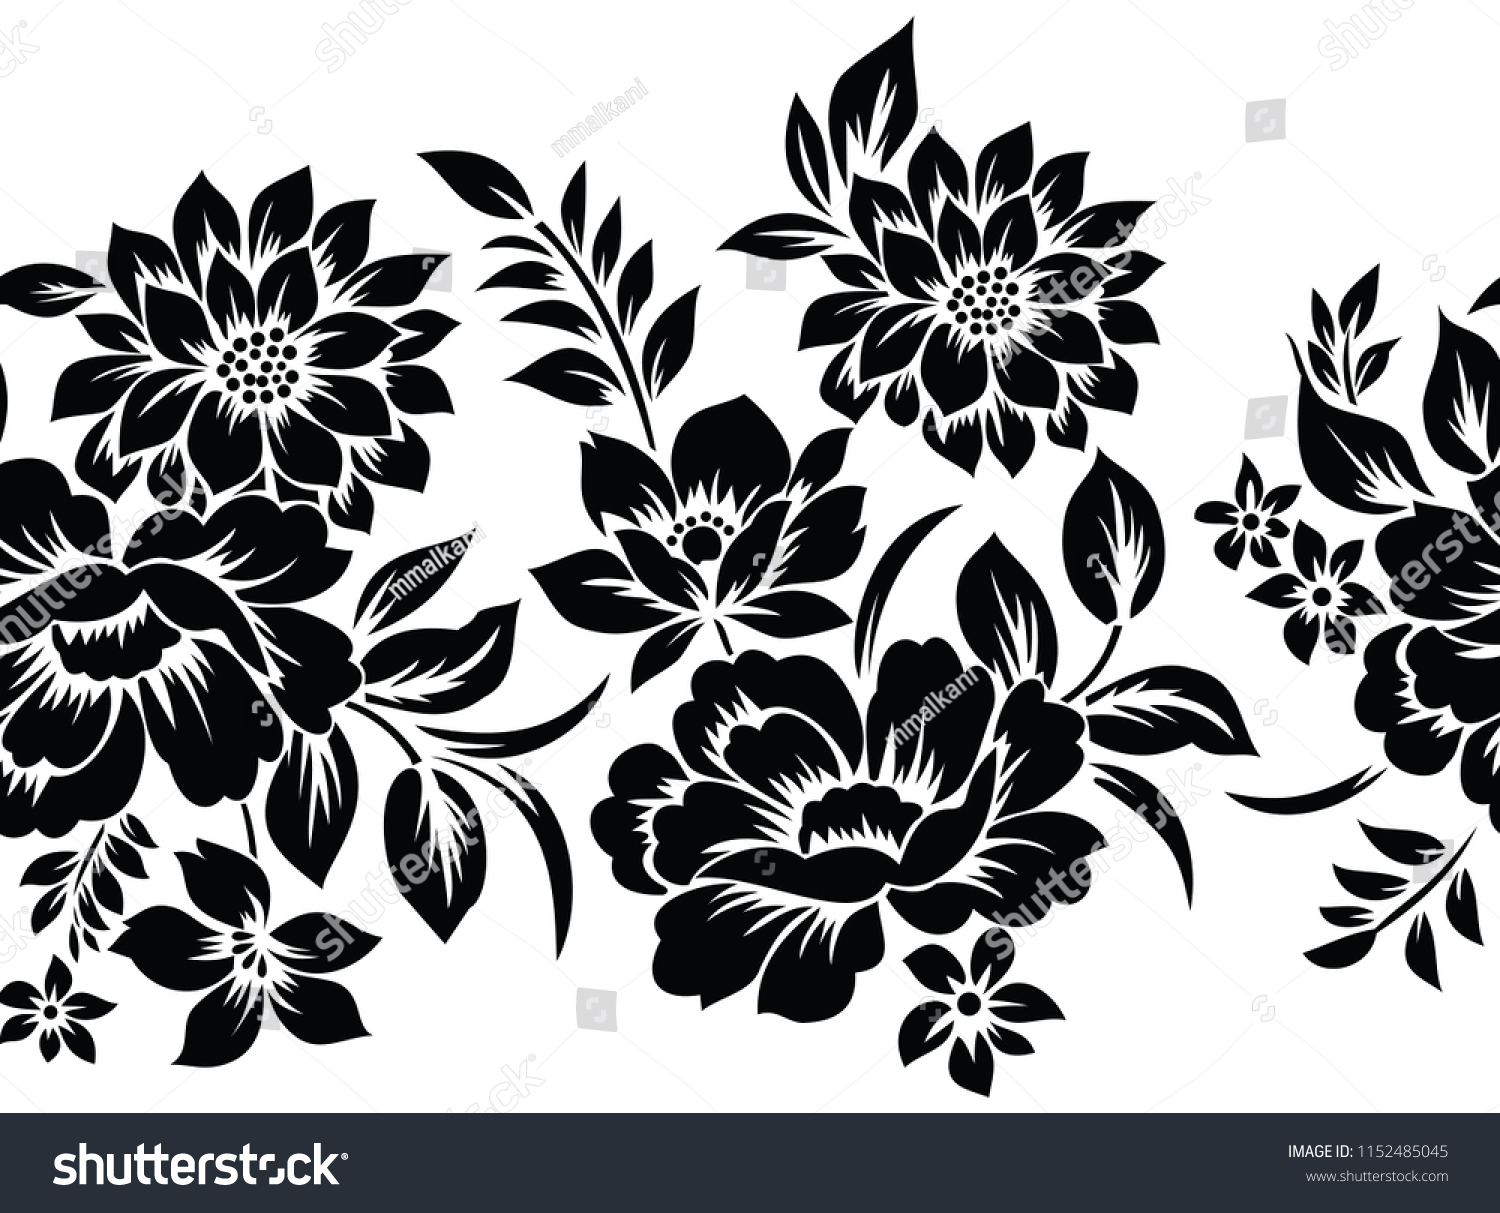 Seamless Black White Floral Border Stock Vector (Royalty Free ...